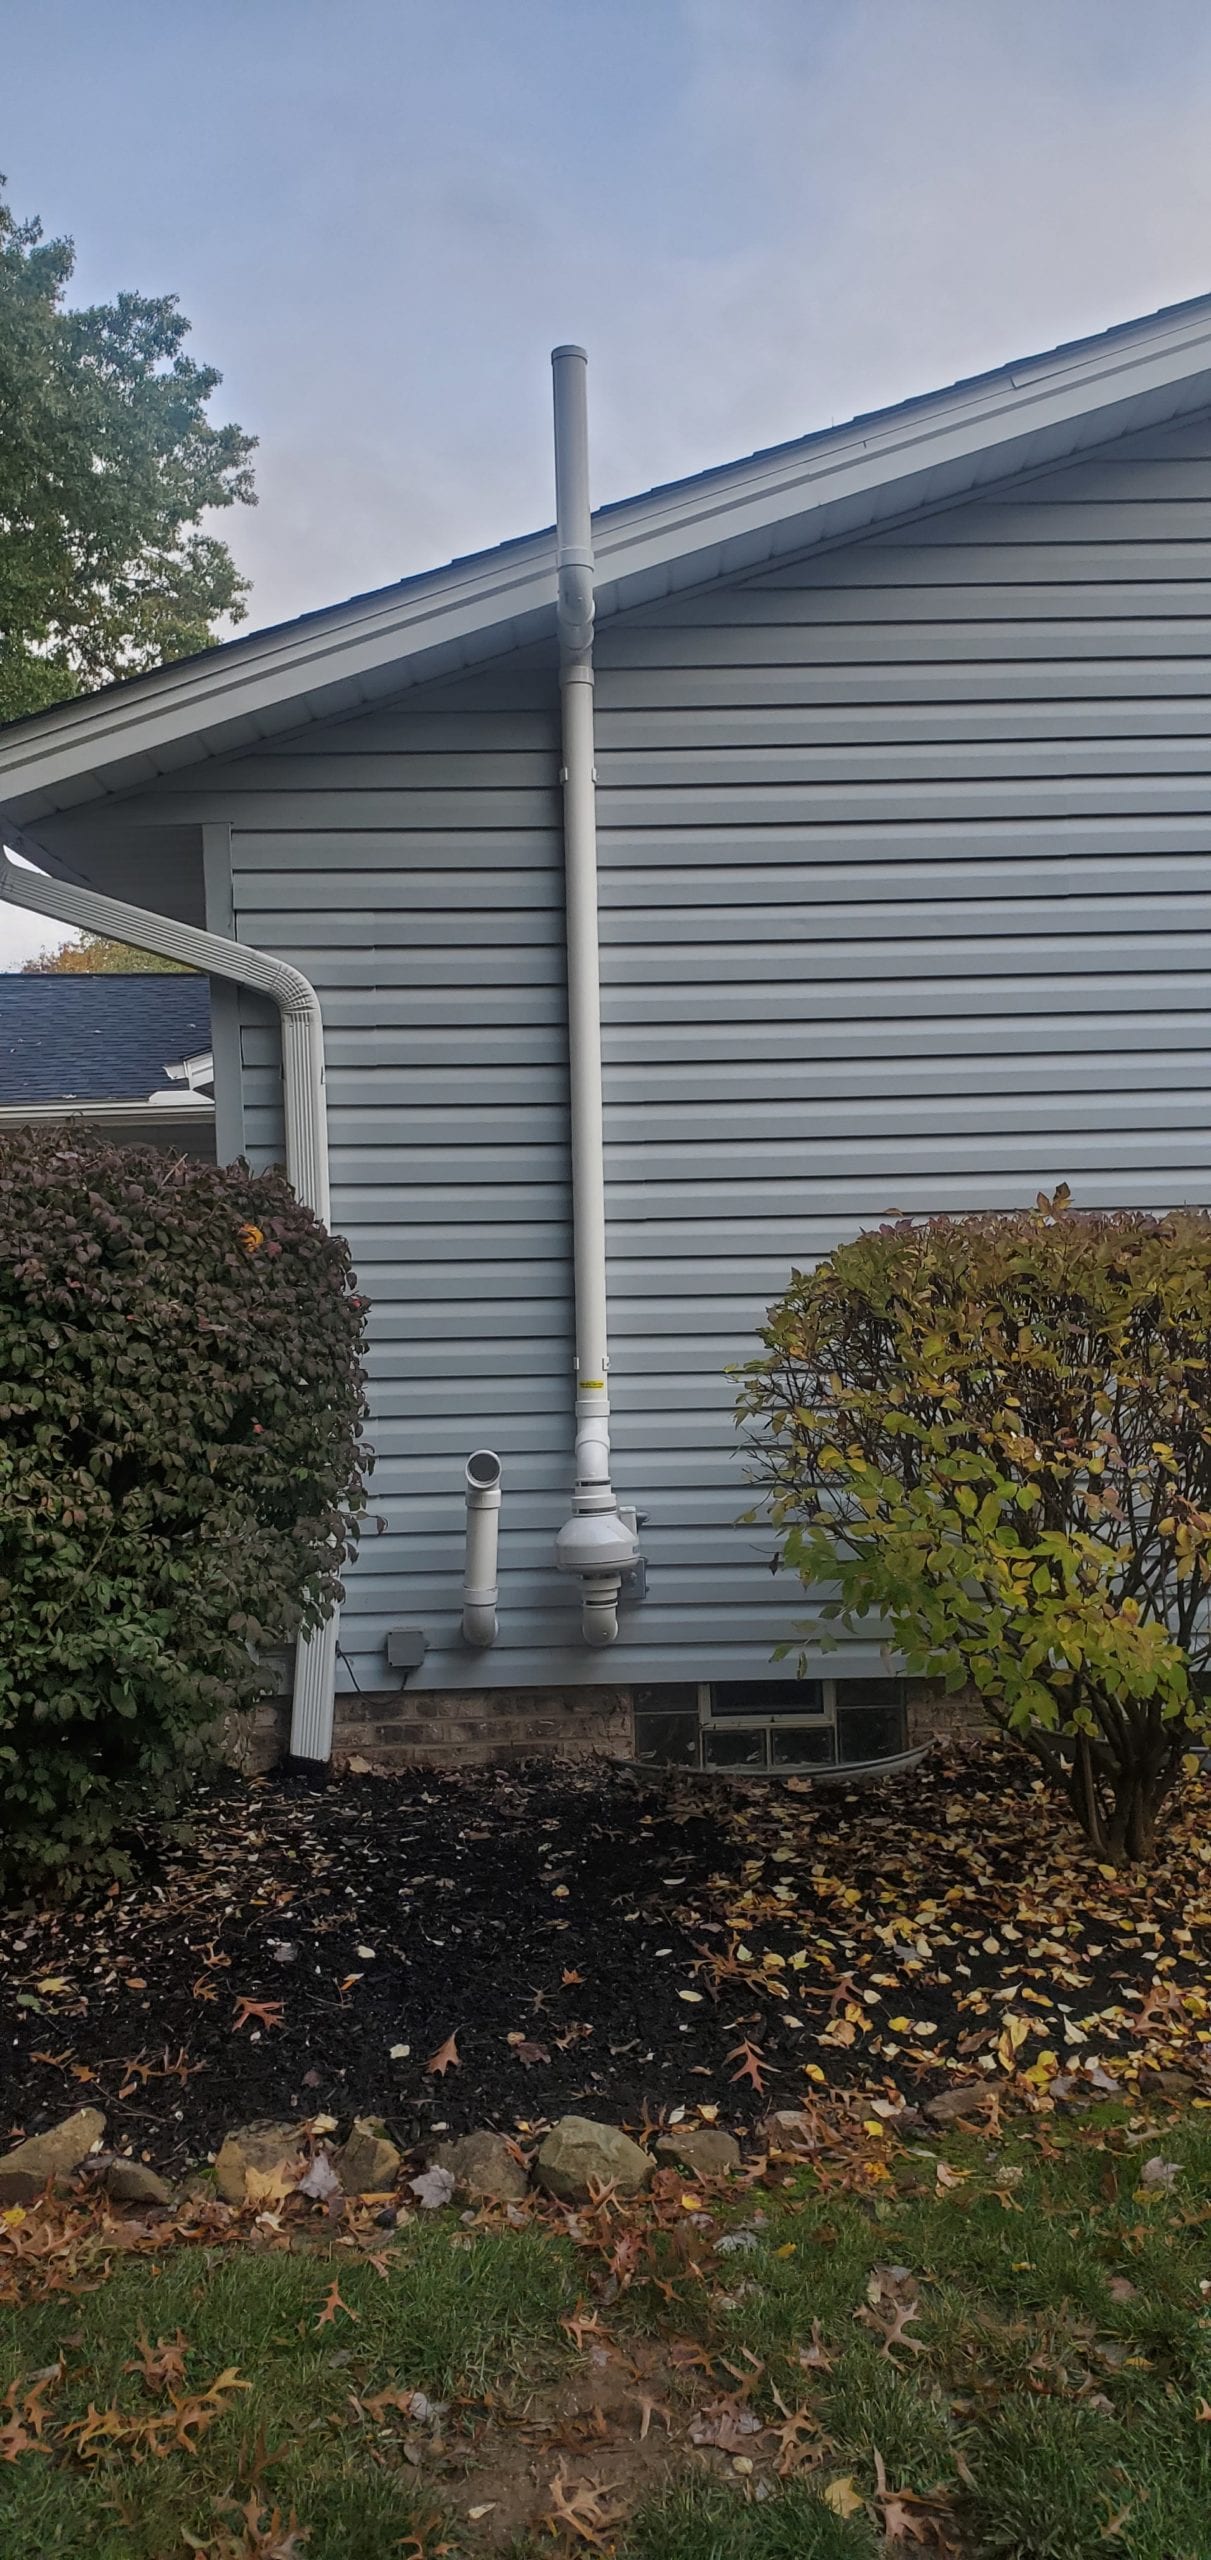 Exterior Radon mitigation System on outside of house